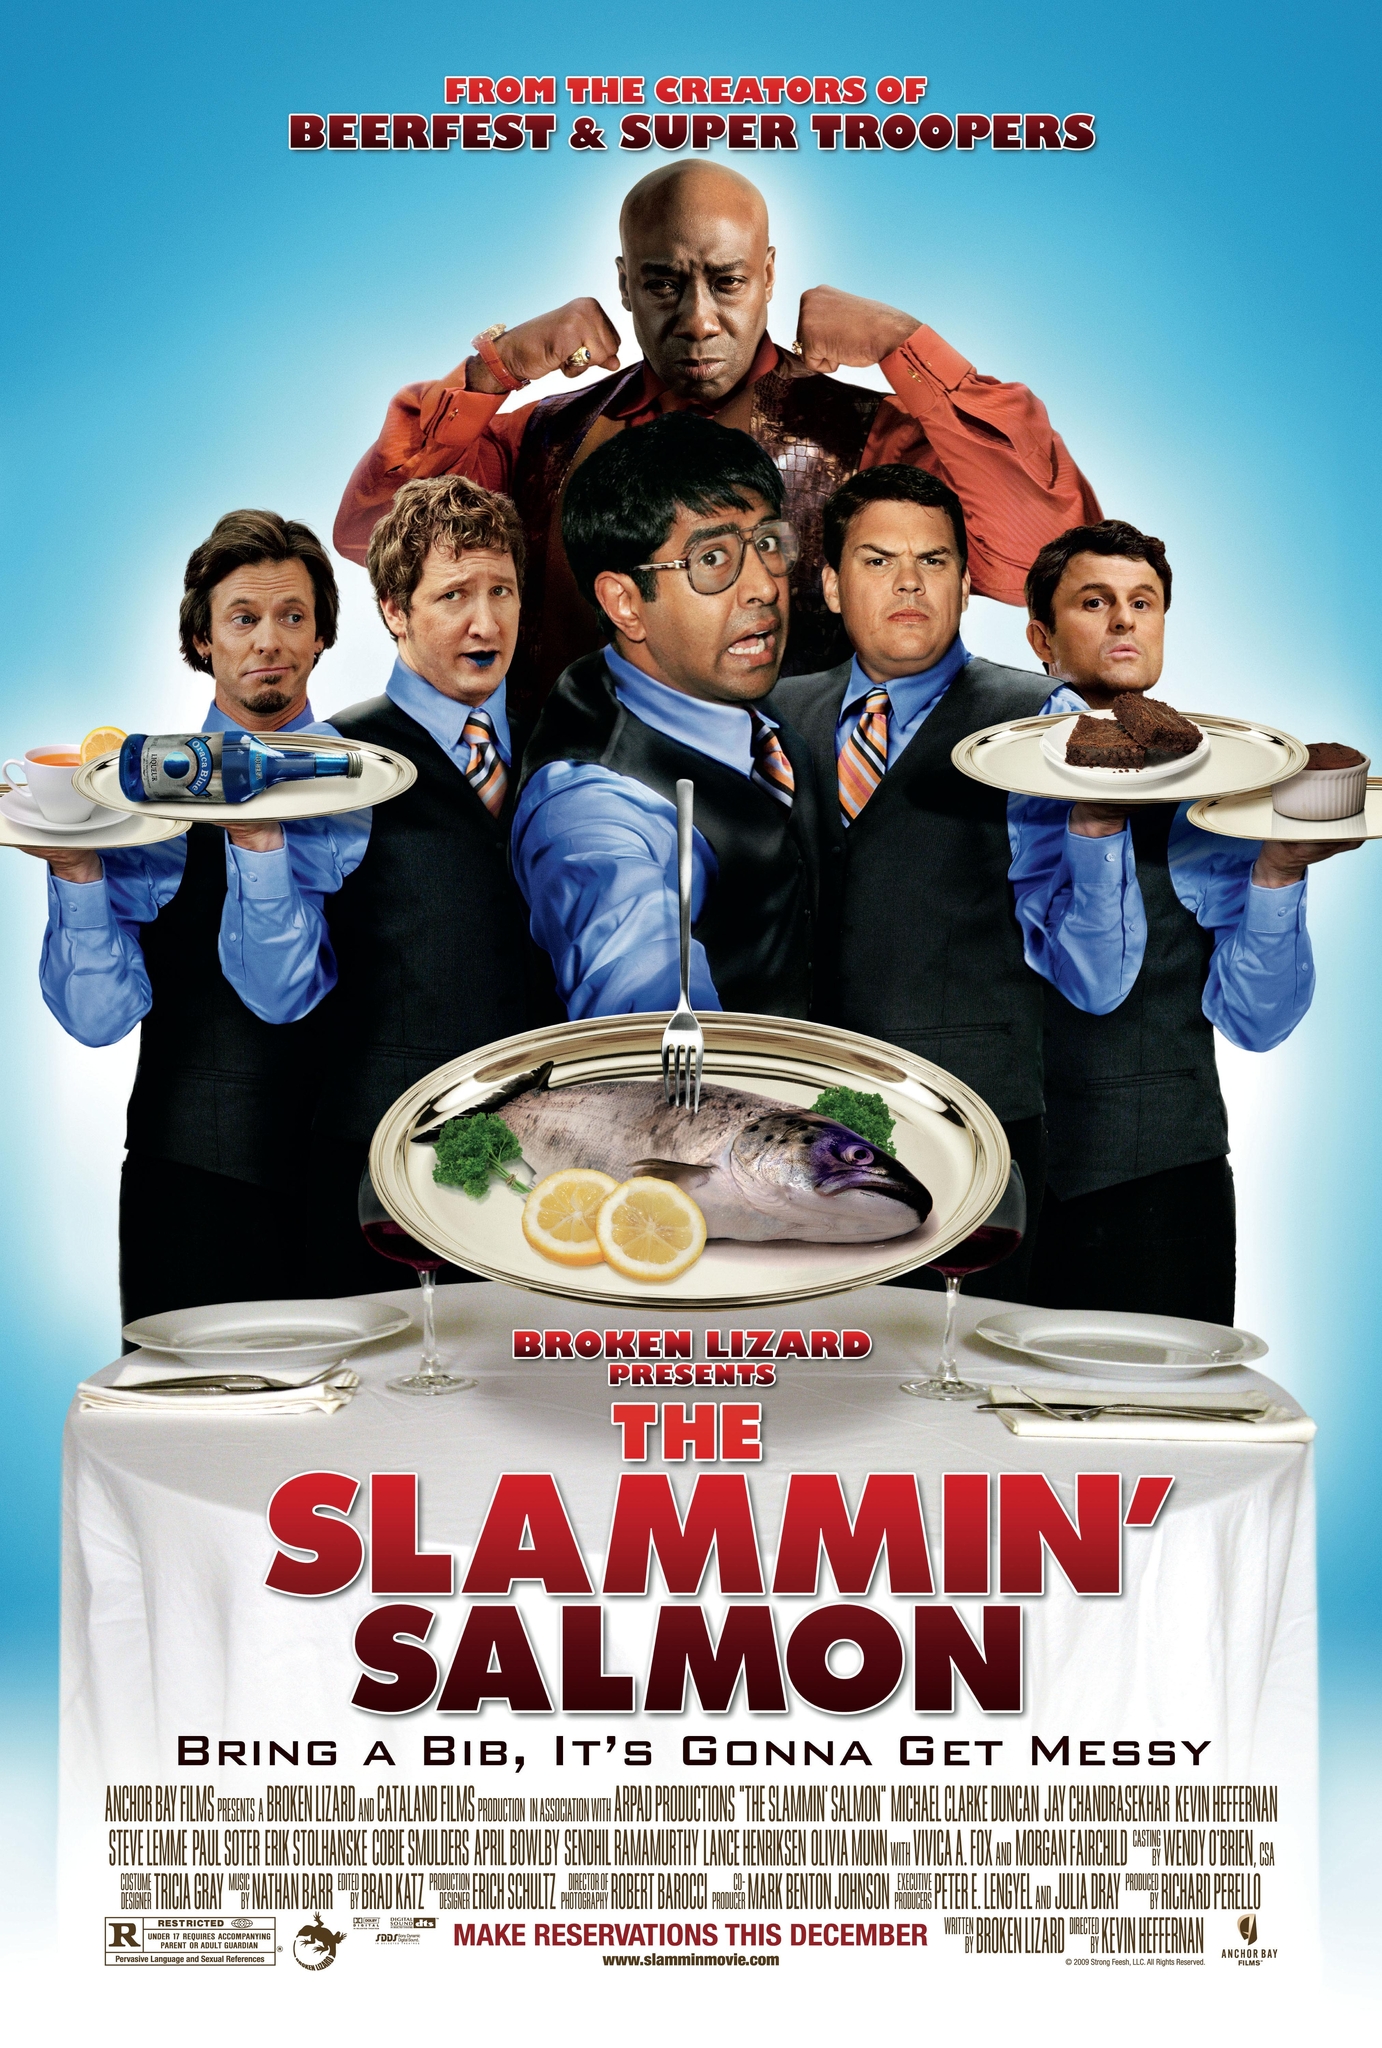 Nonton film The Slammin Salmon layarkaca21 indoxx1 ganool online streaming terbaru